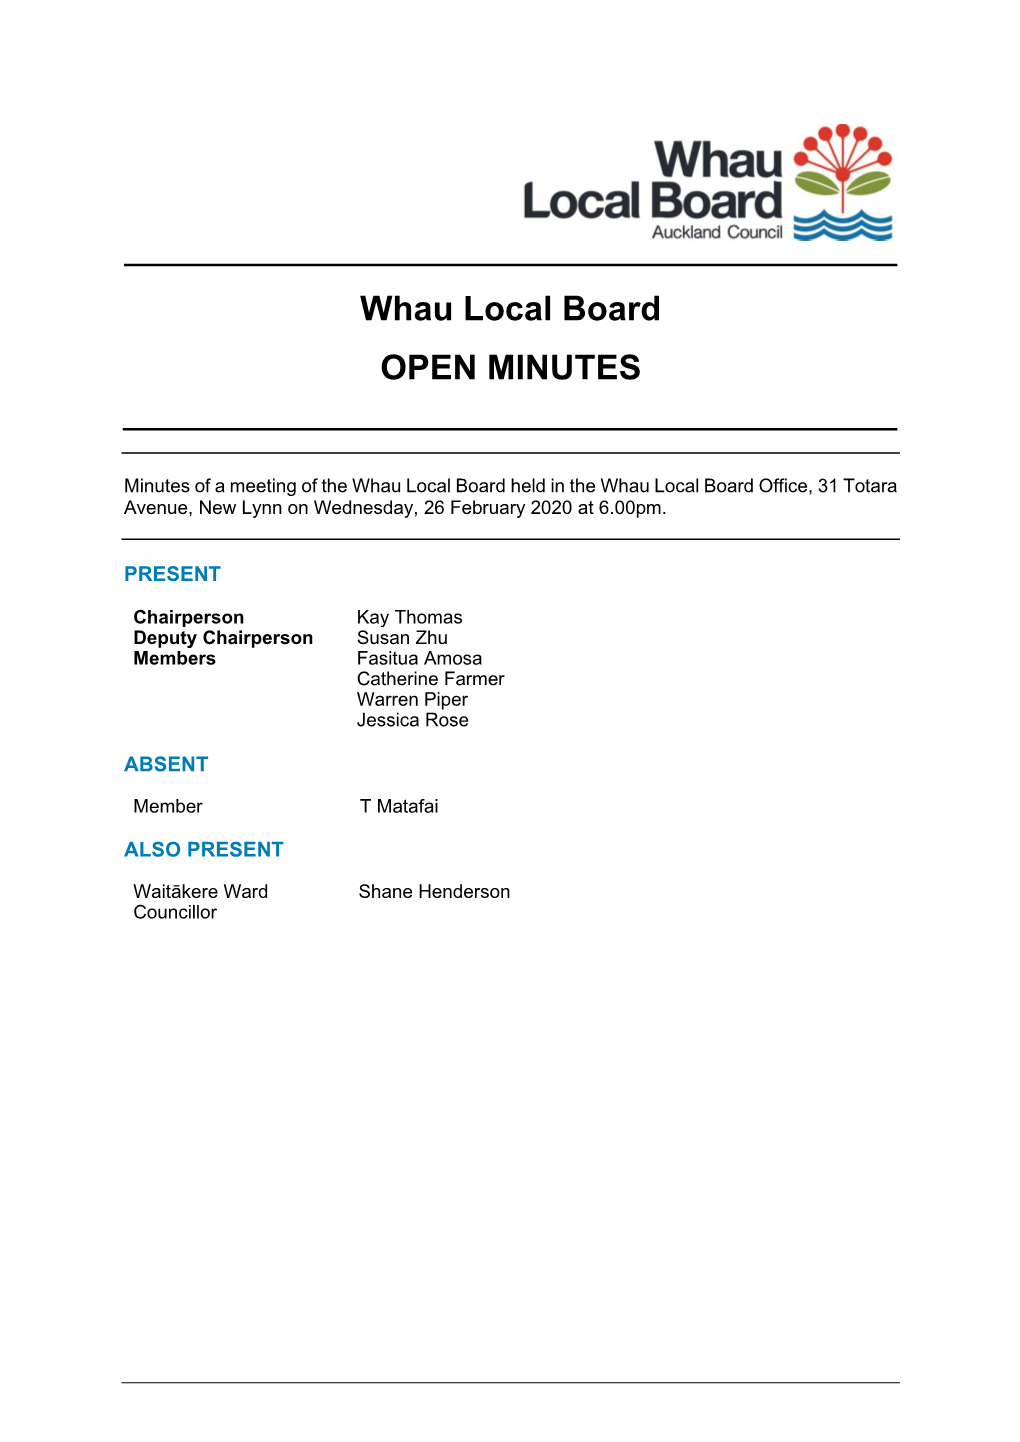 Minutes of Whau Local Board